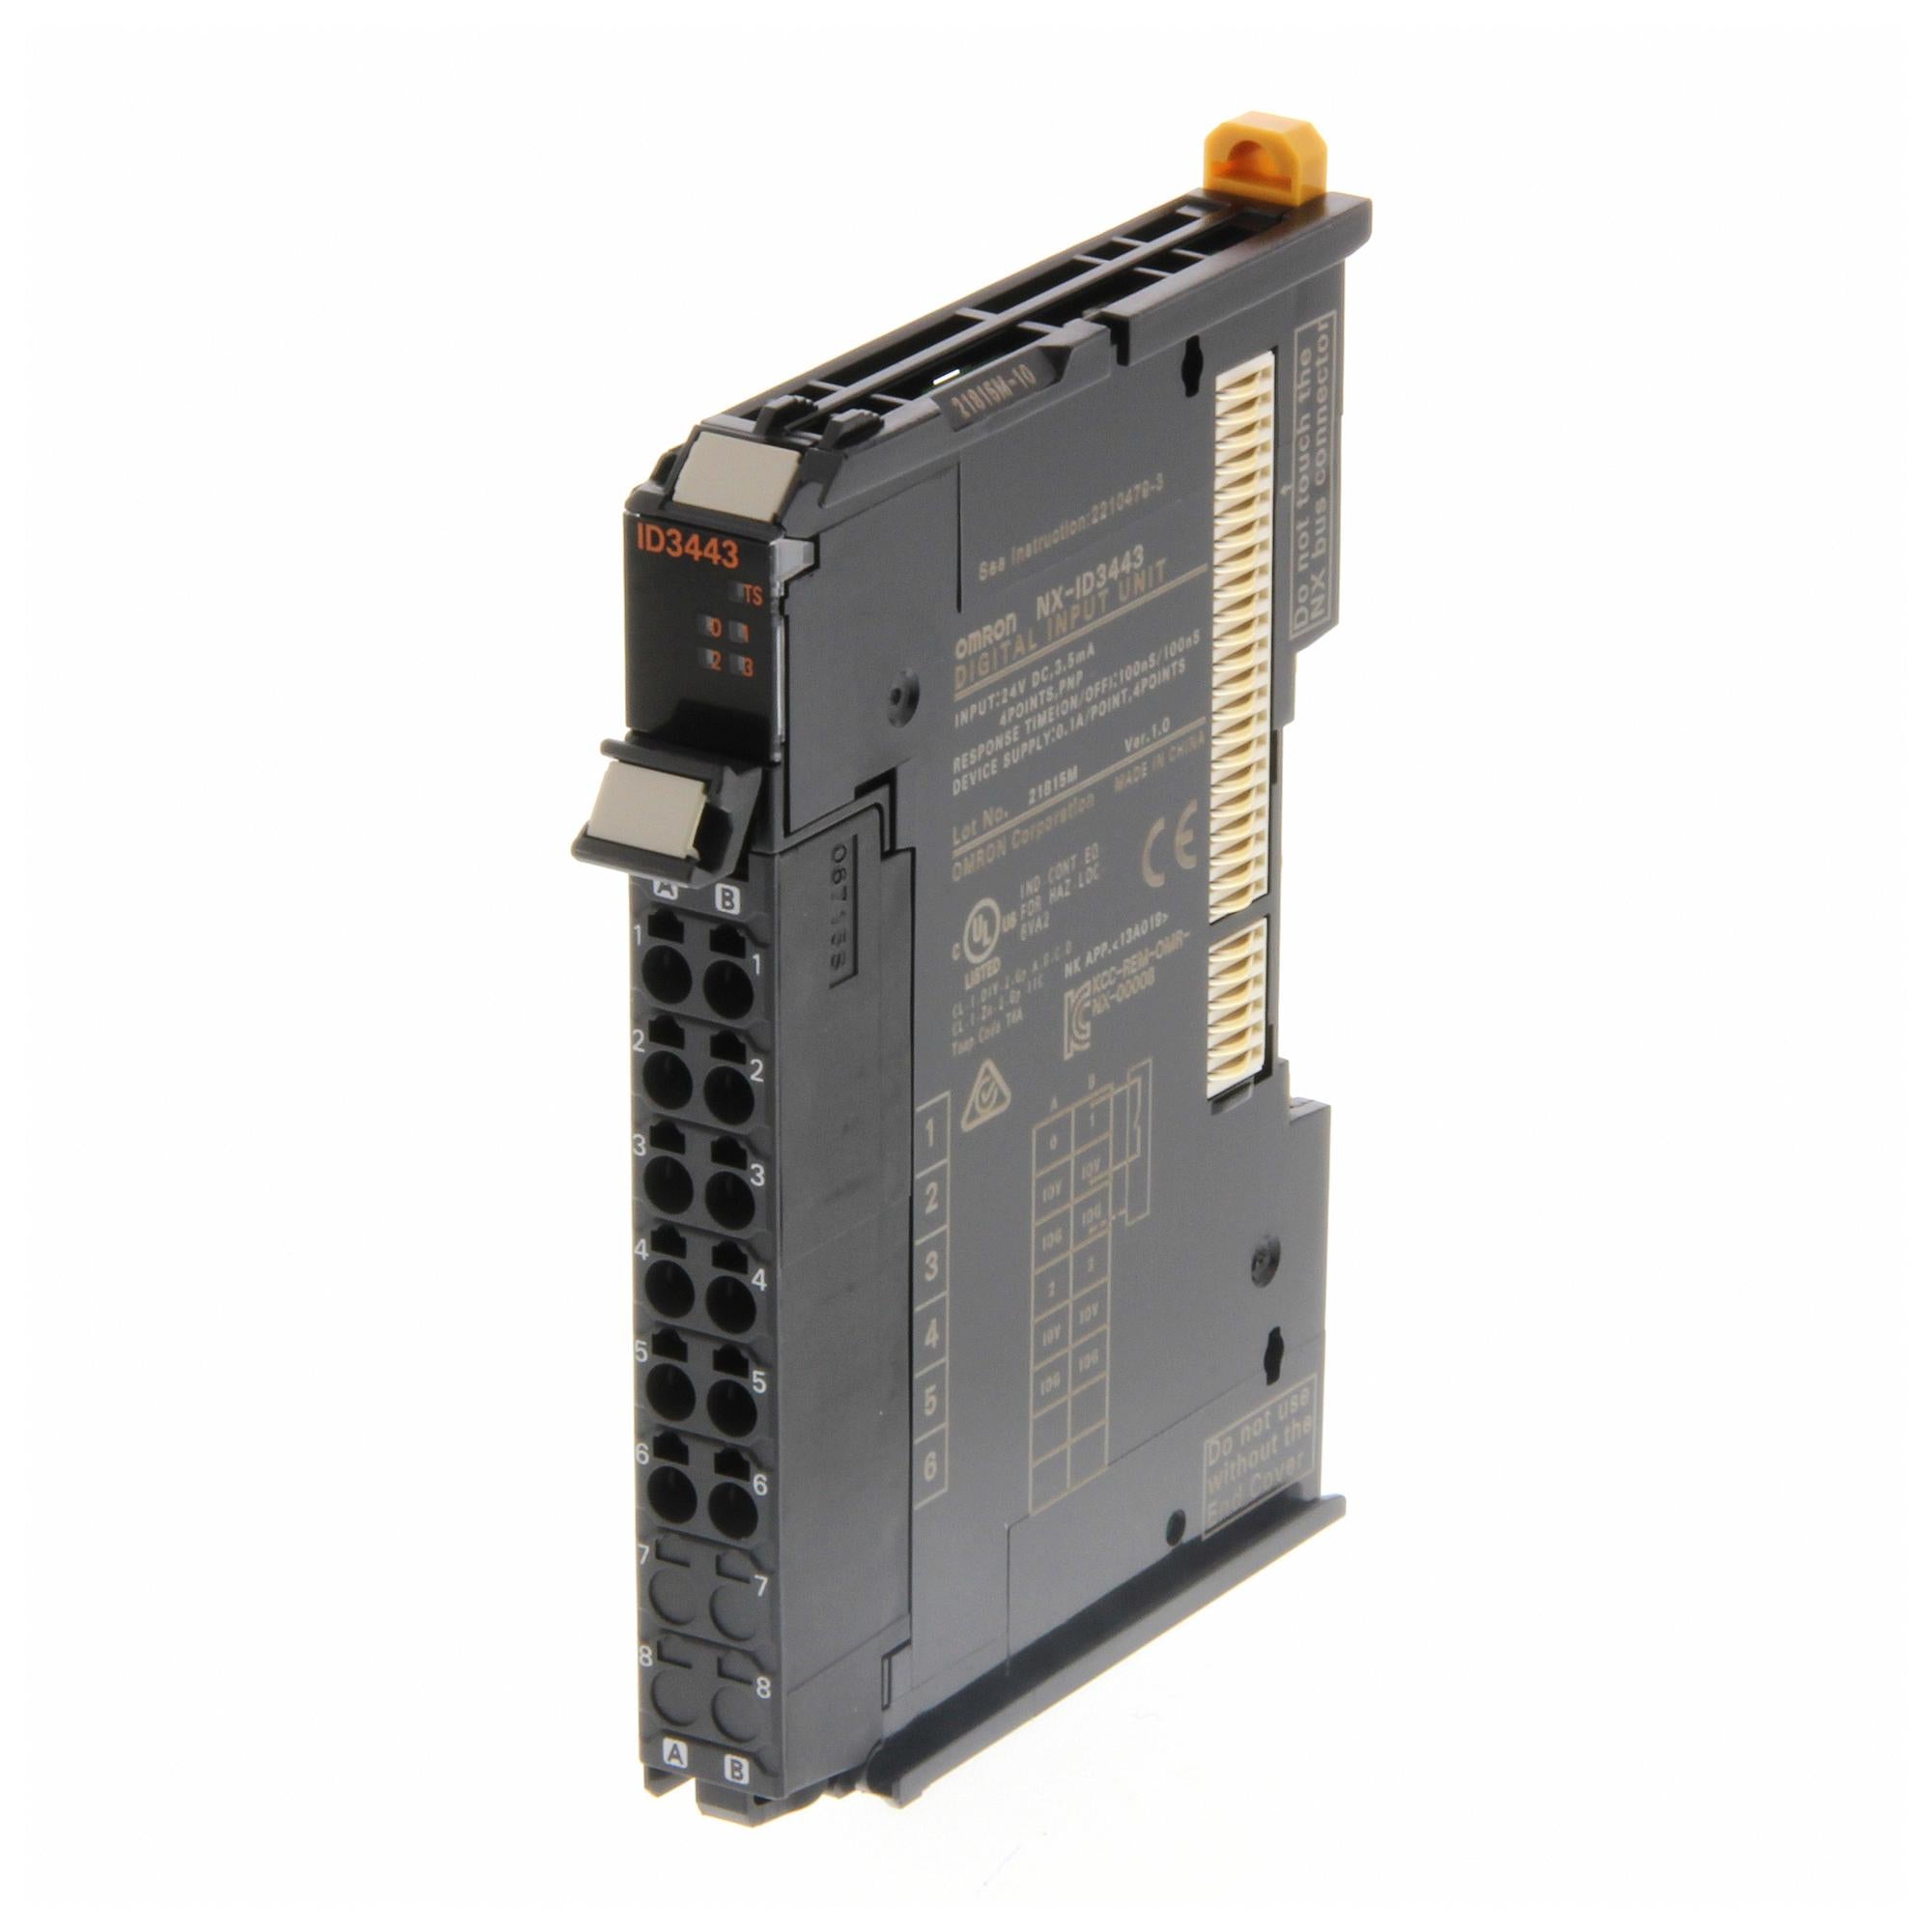 NX-ID3443 DIGITAL INPUT PLC CONTROLLERS OMRON